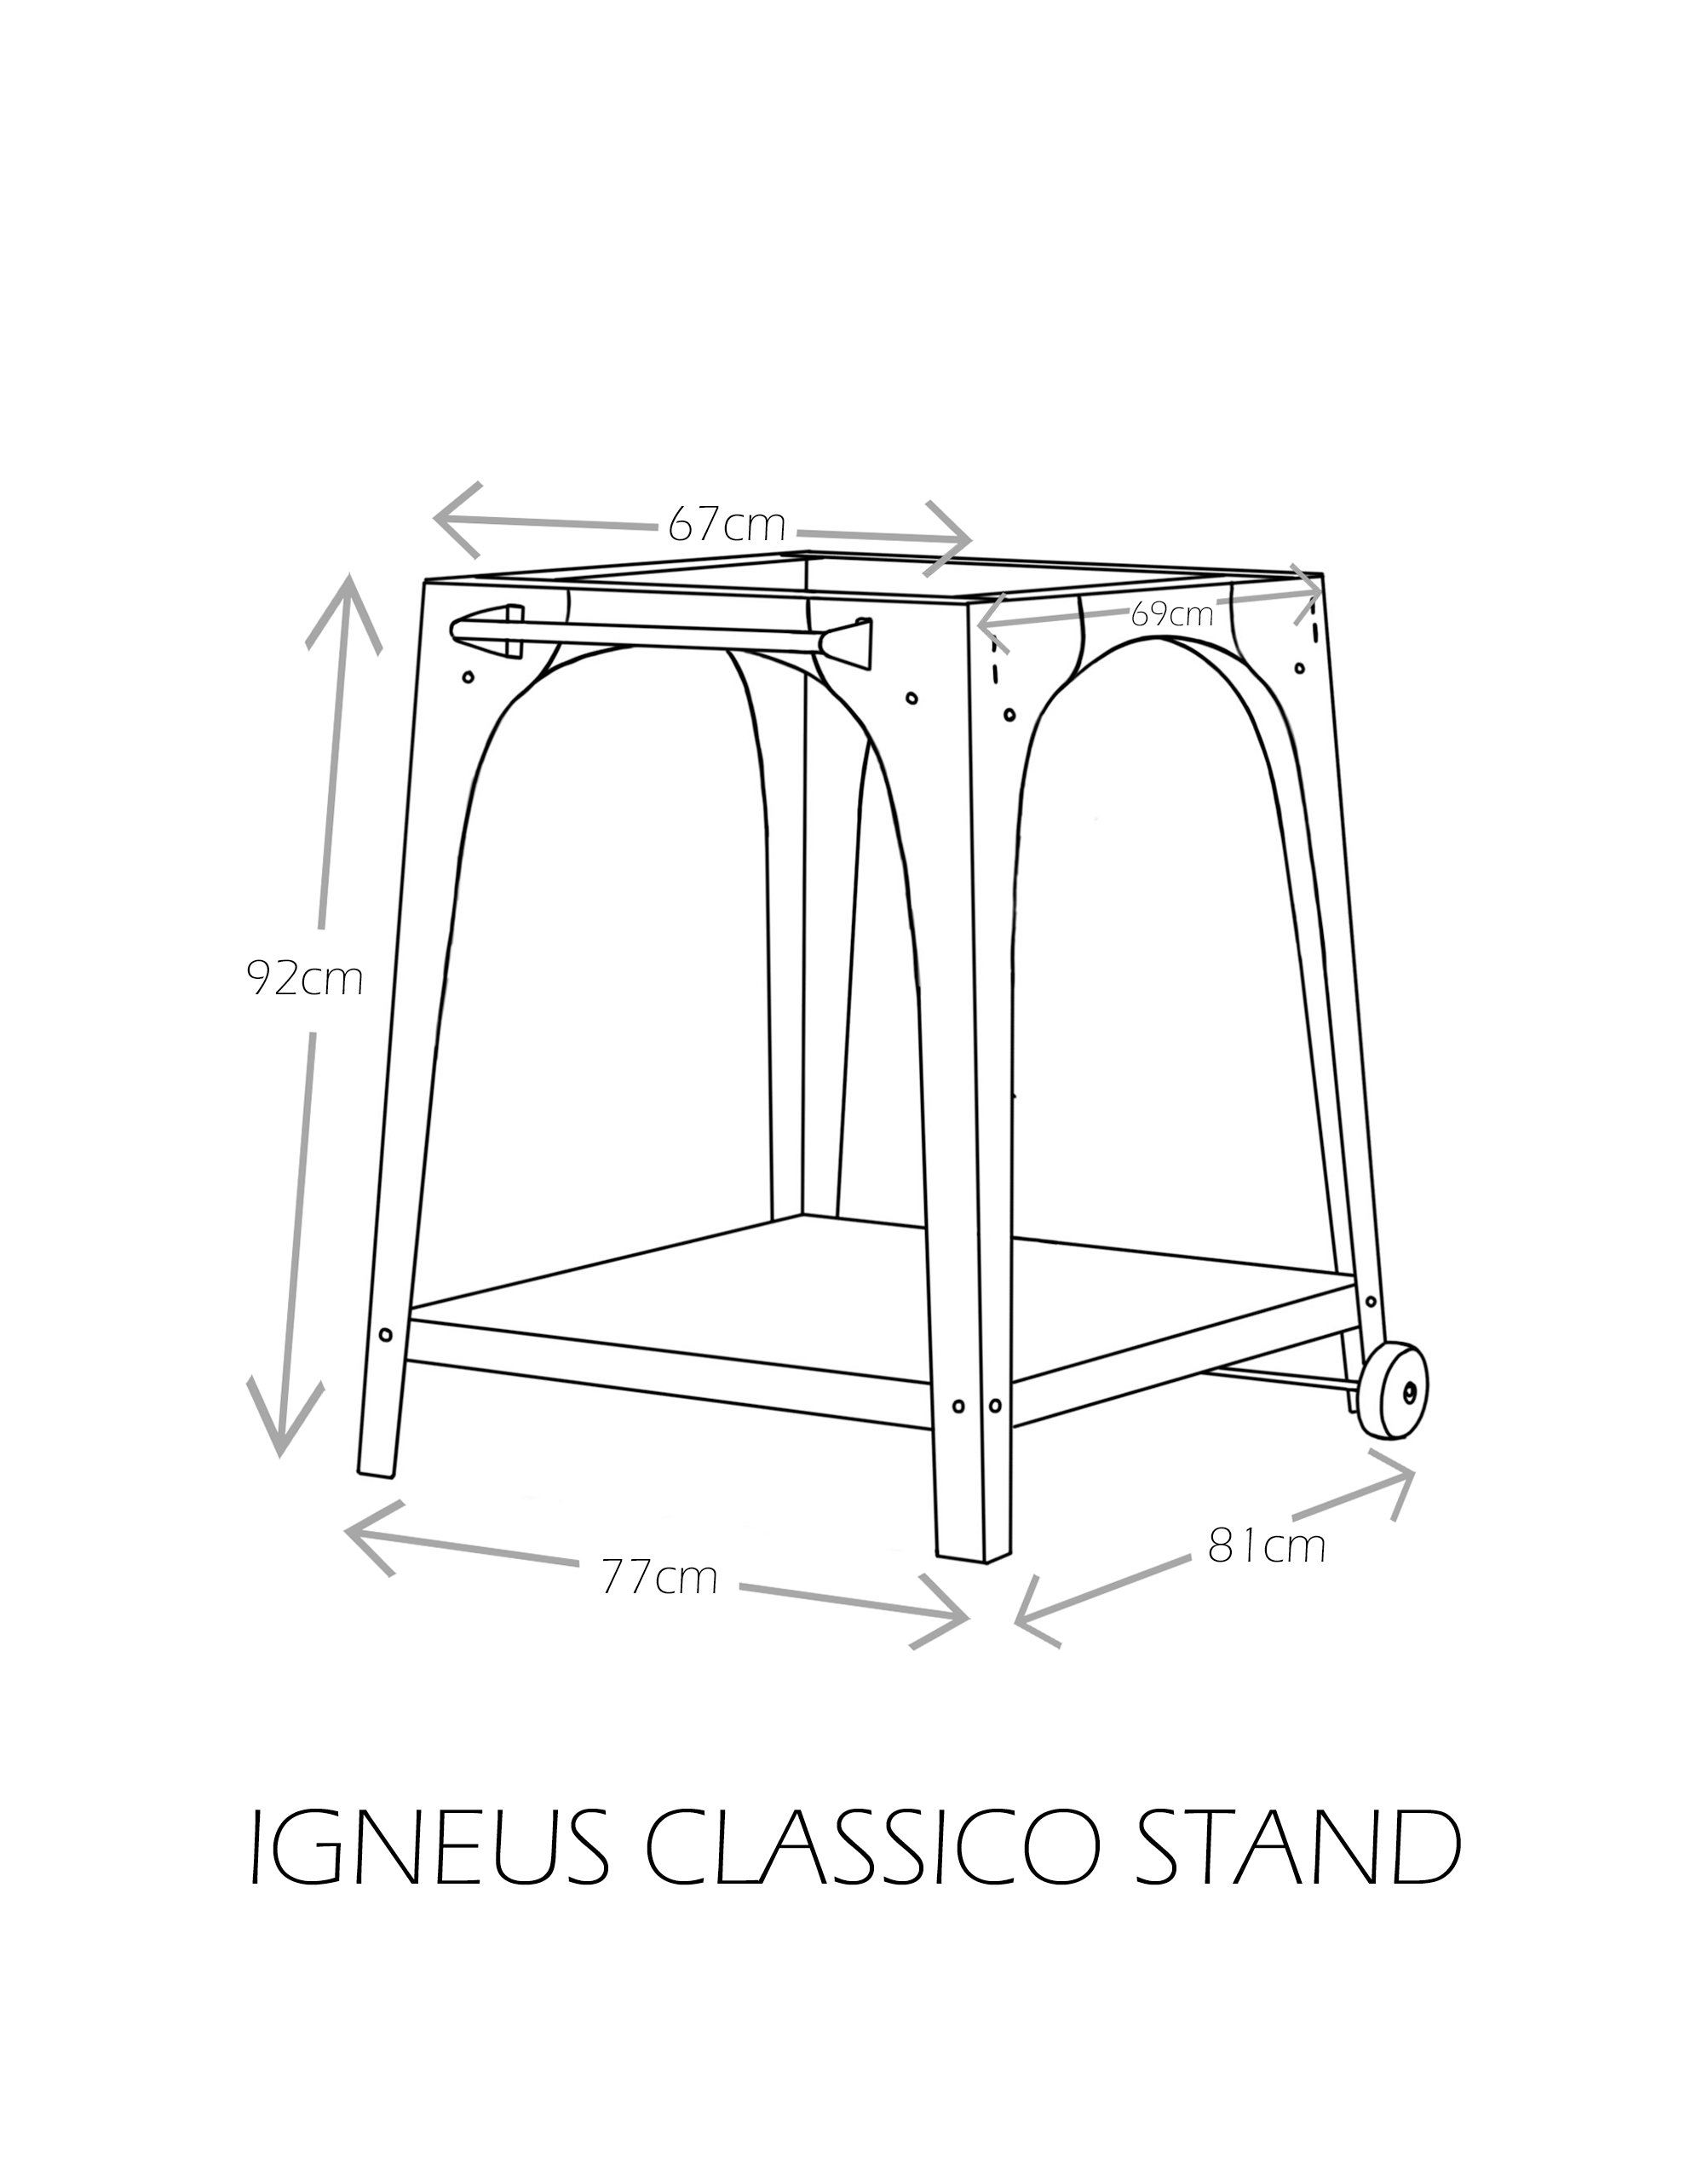 Igneus Classico Stand - Dimensions